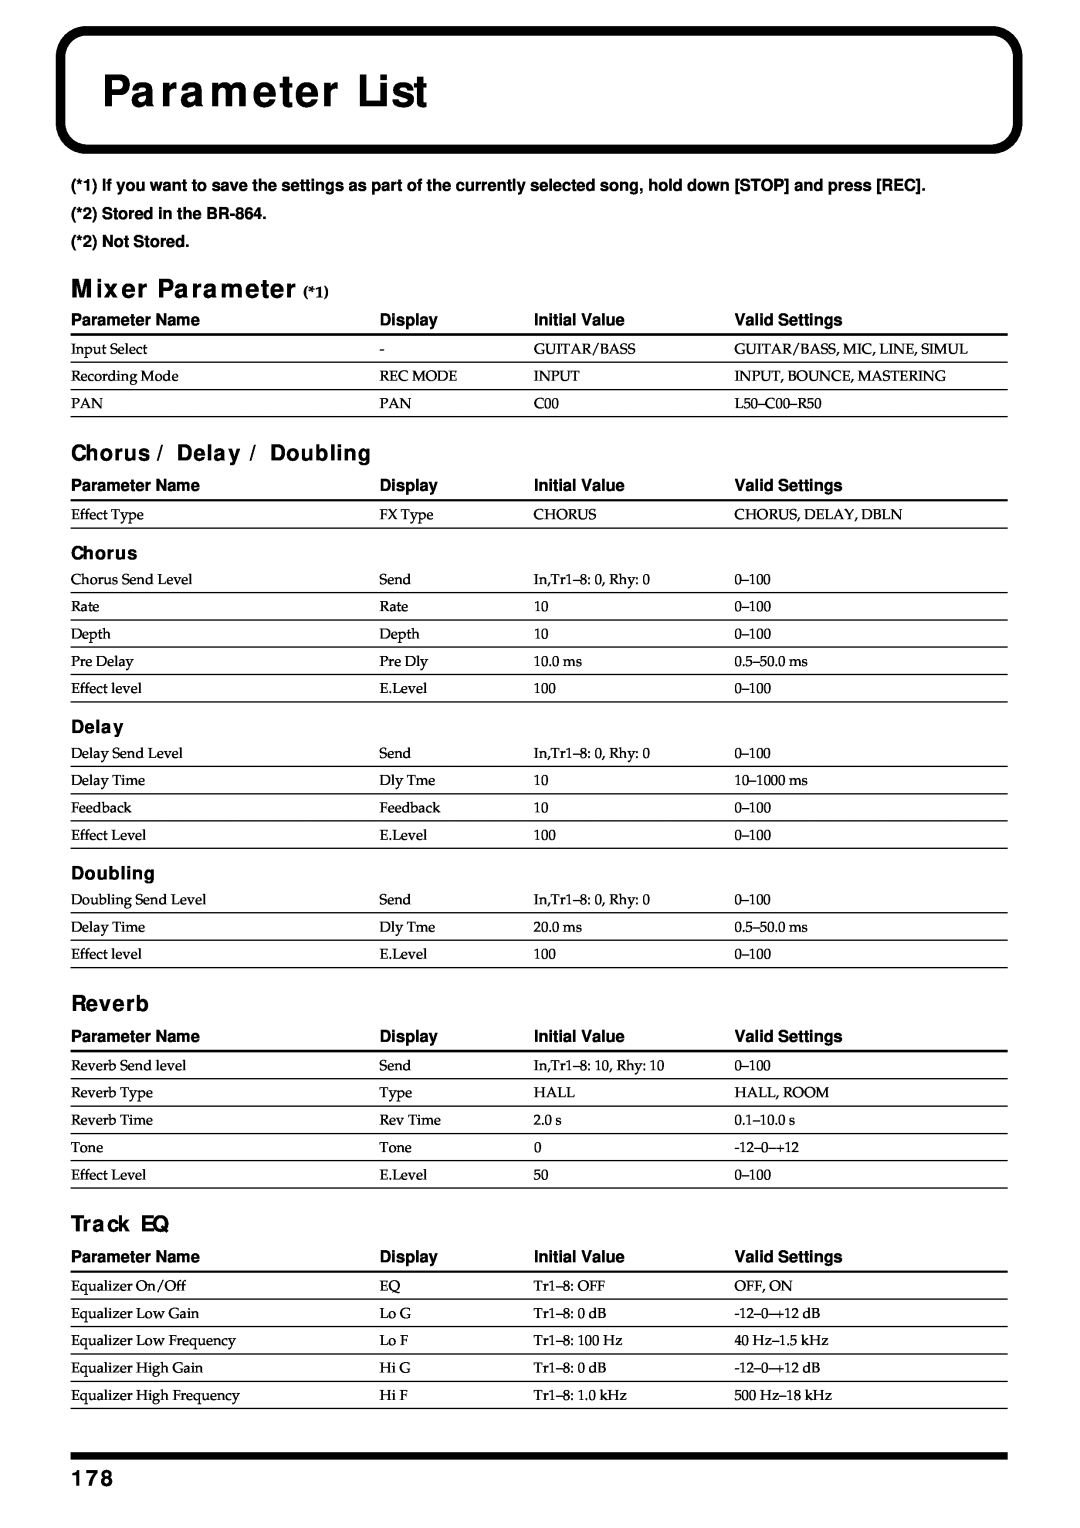 Roland BR-864 owner manual Parameter List, Mixer Parameter *1 